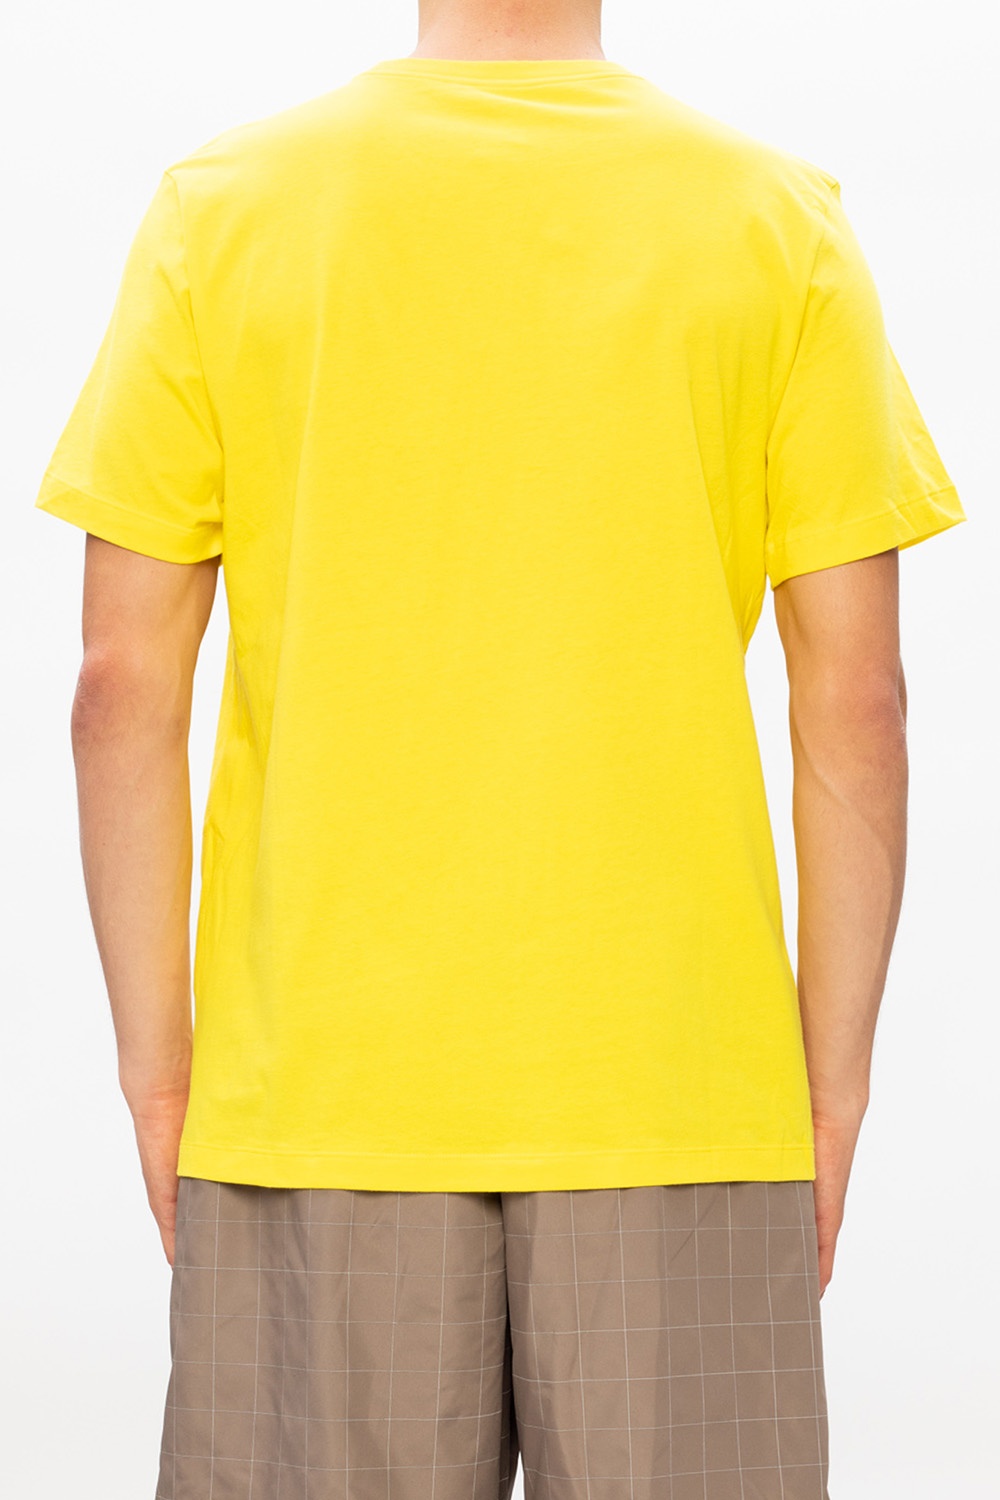 opti yellow nike shirt